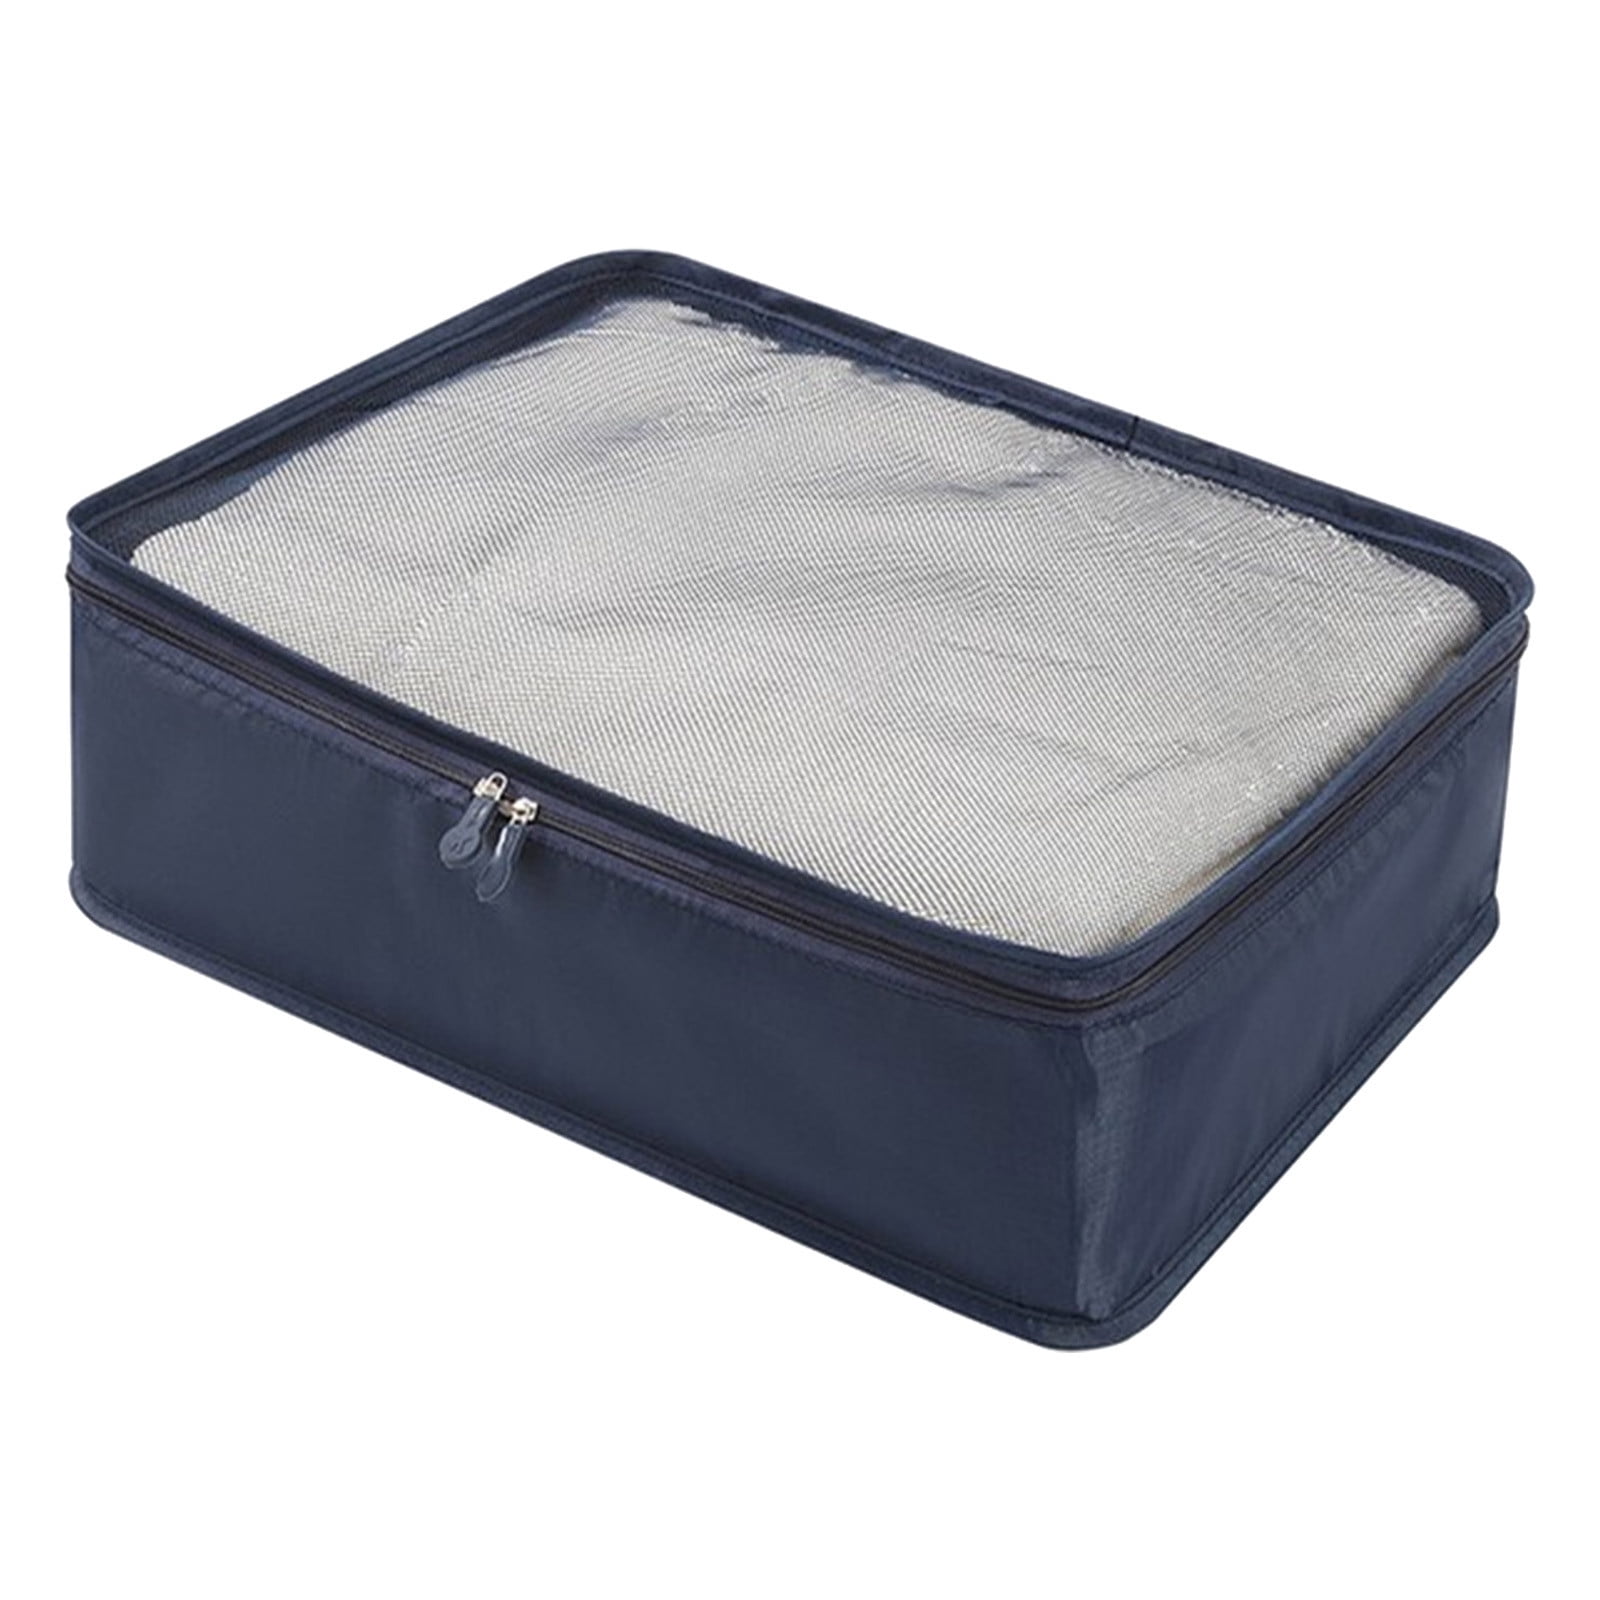 Buy New Women Bra Underwear Travel Bags Suitcase Organizer Travel Bags  Luggage Organizer For Lingerie Makeup Toiletry Wash Bag pouch